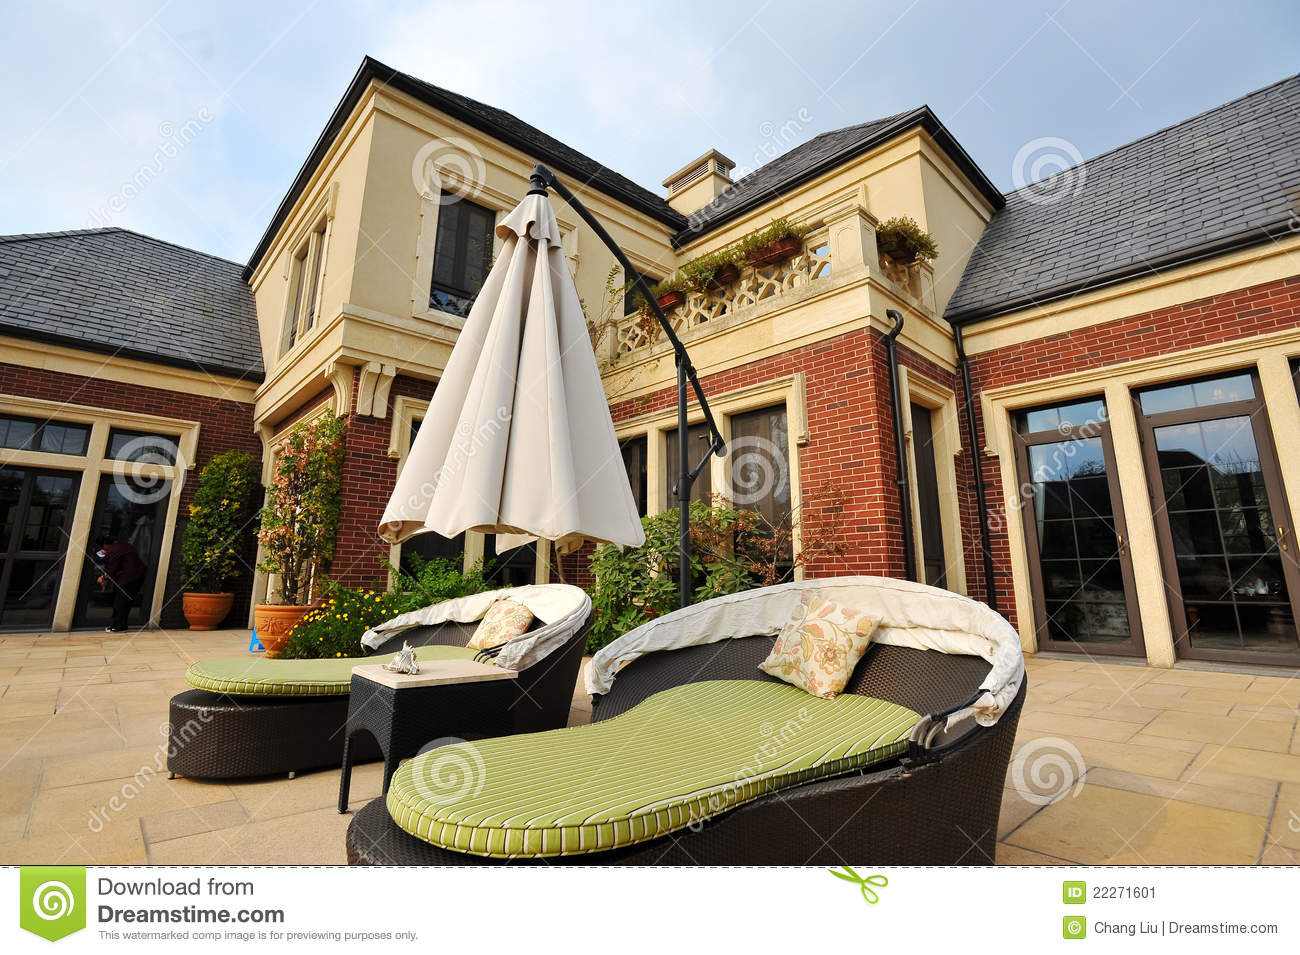 Villa Deck Chair And Umbrella Stock Image   Image  22271601